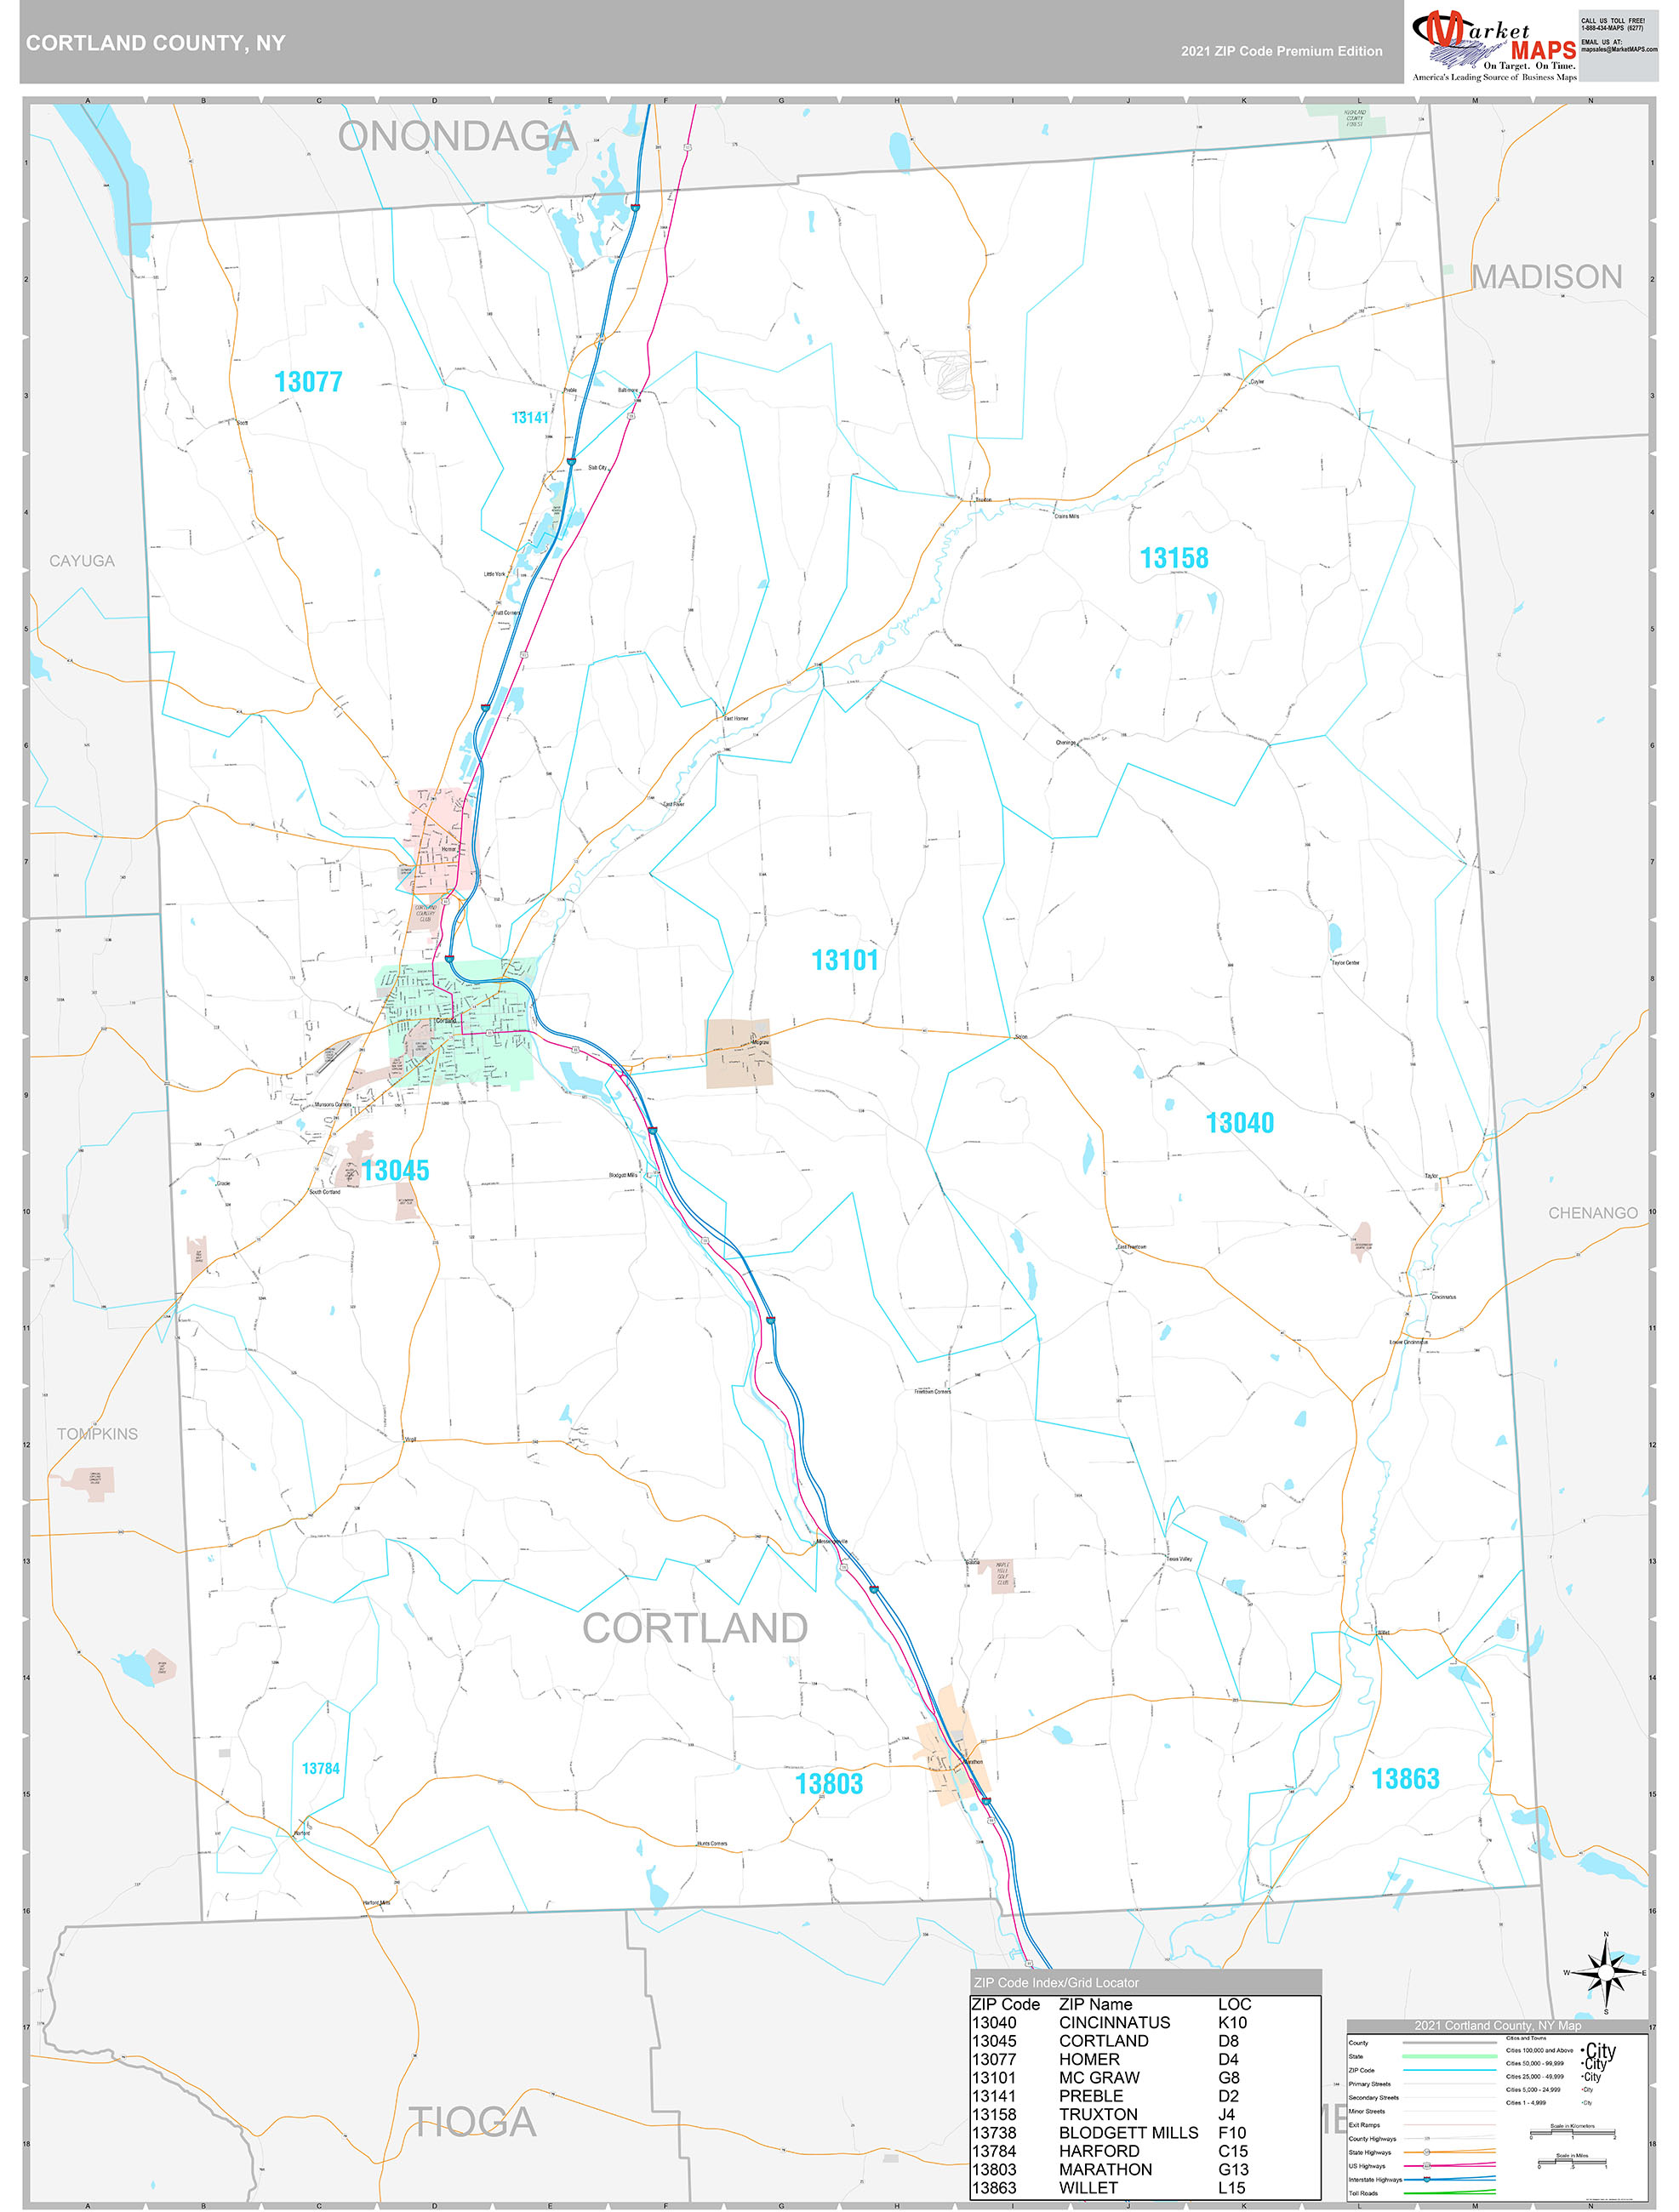 Cortland County, NY Wall Map Premium Style by MarketMAPS - MapSales